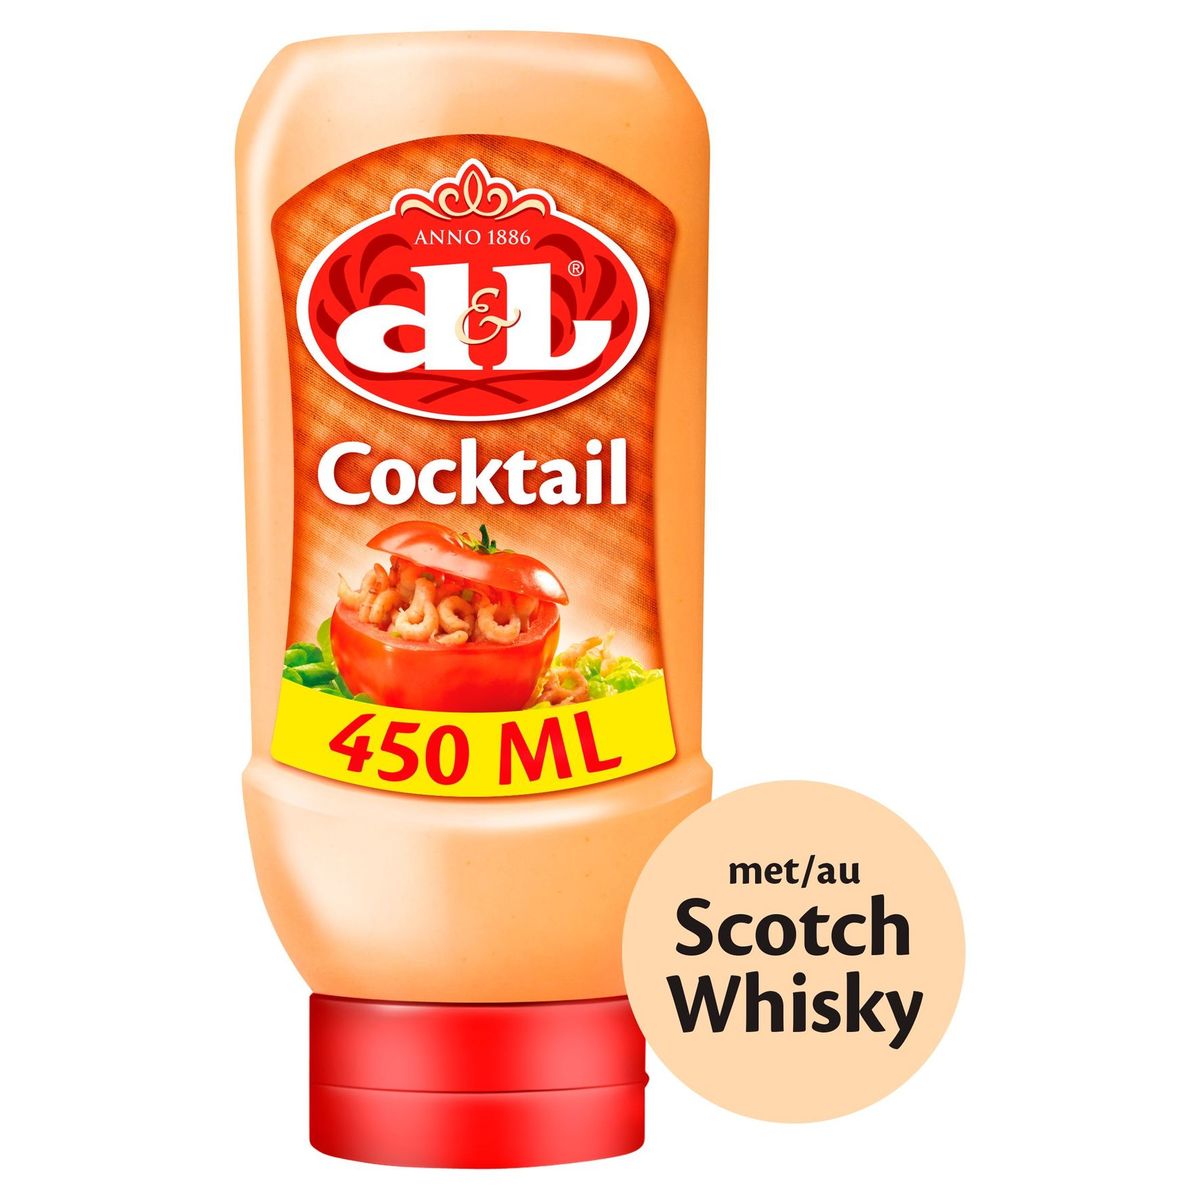 Devos Lemmens Cocktail met Scotch Whisky 450 ml